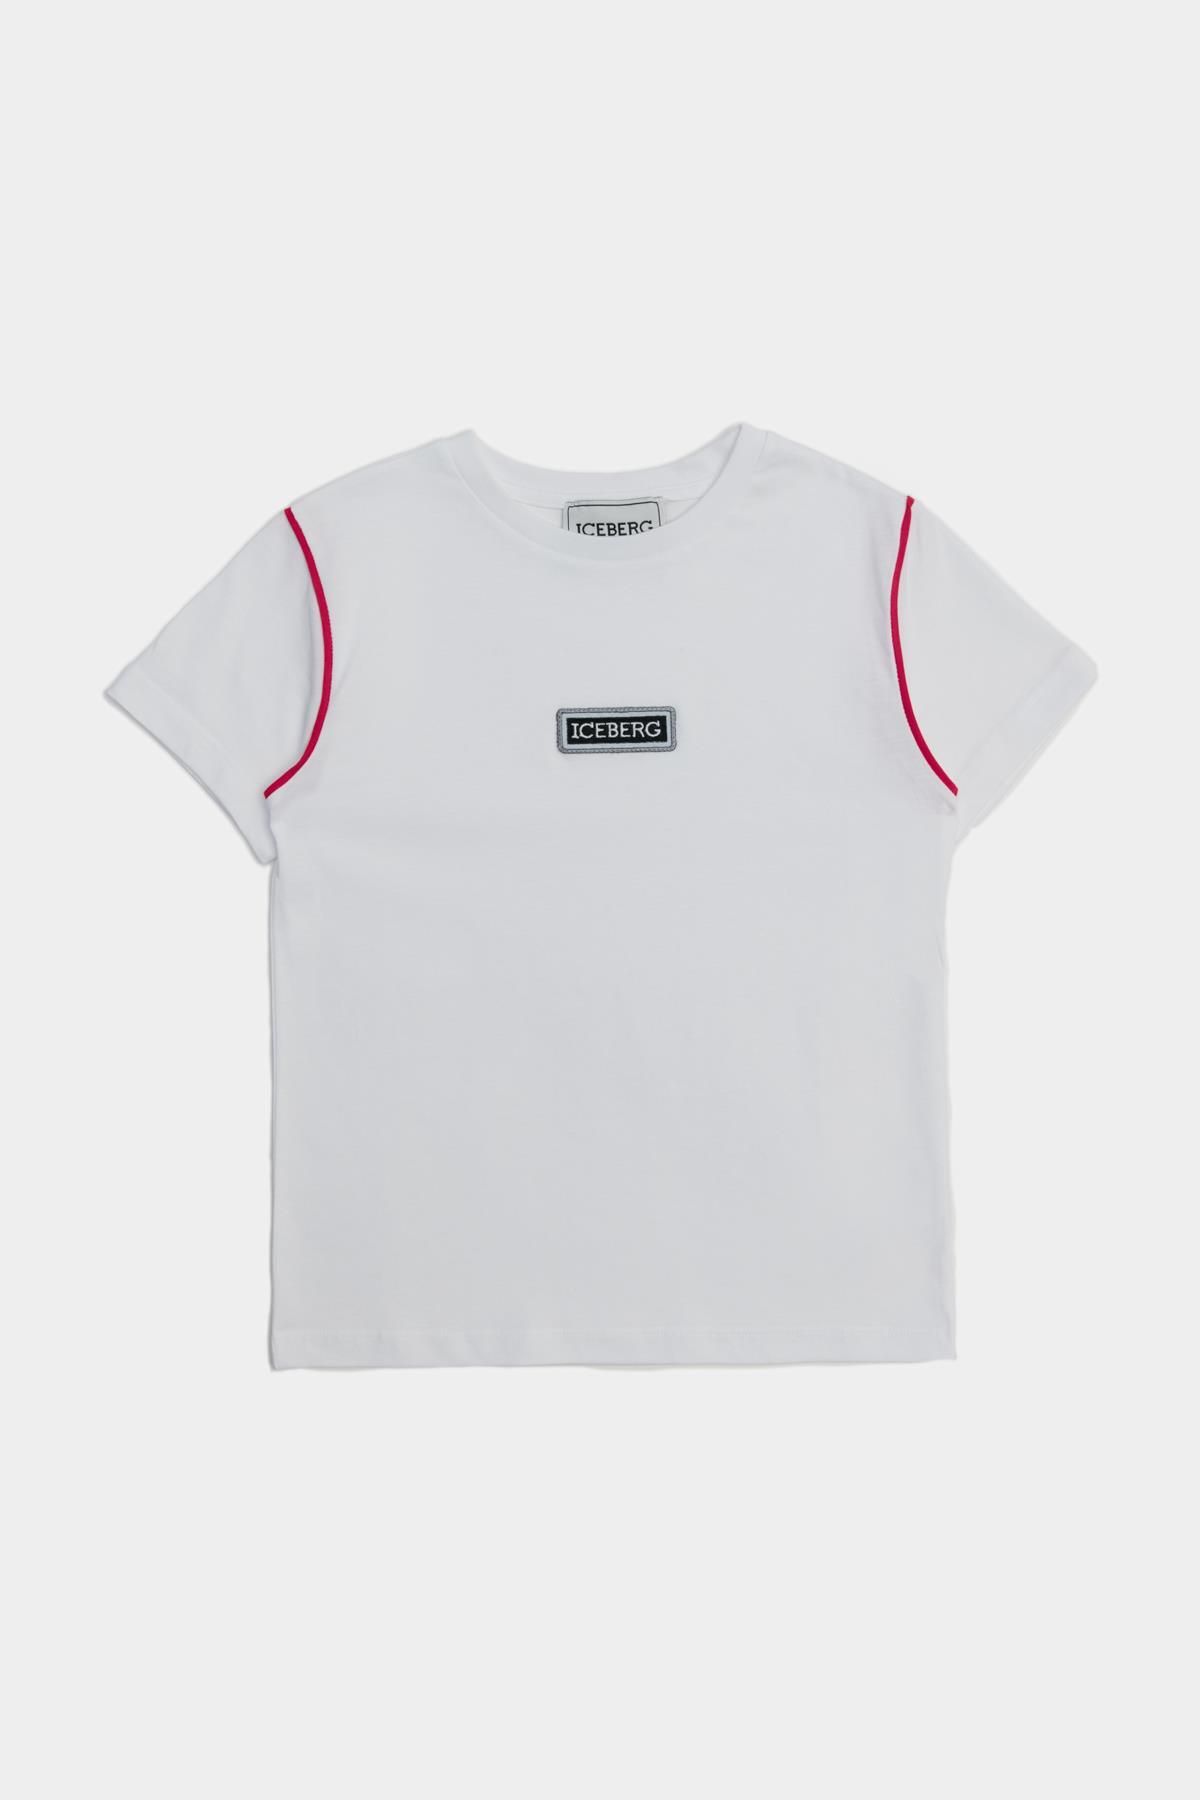 Iceberg Bg Store Erkek Çocuk Beyaz T-shirt 23ssıts3121